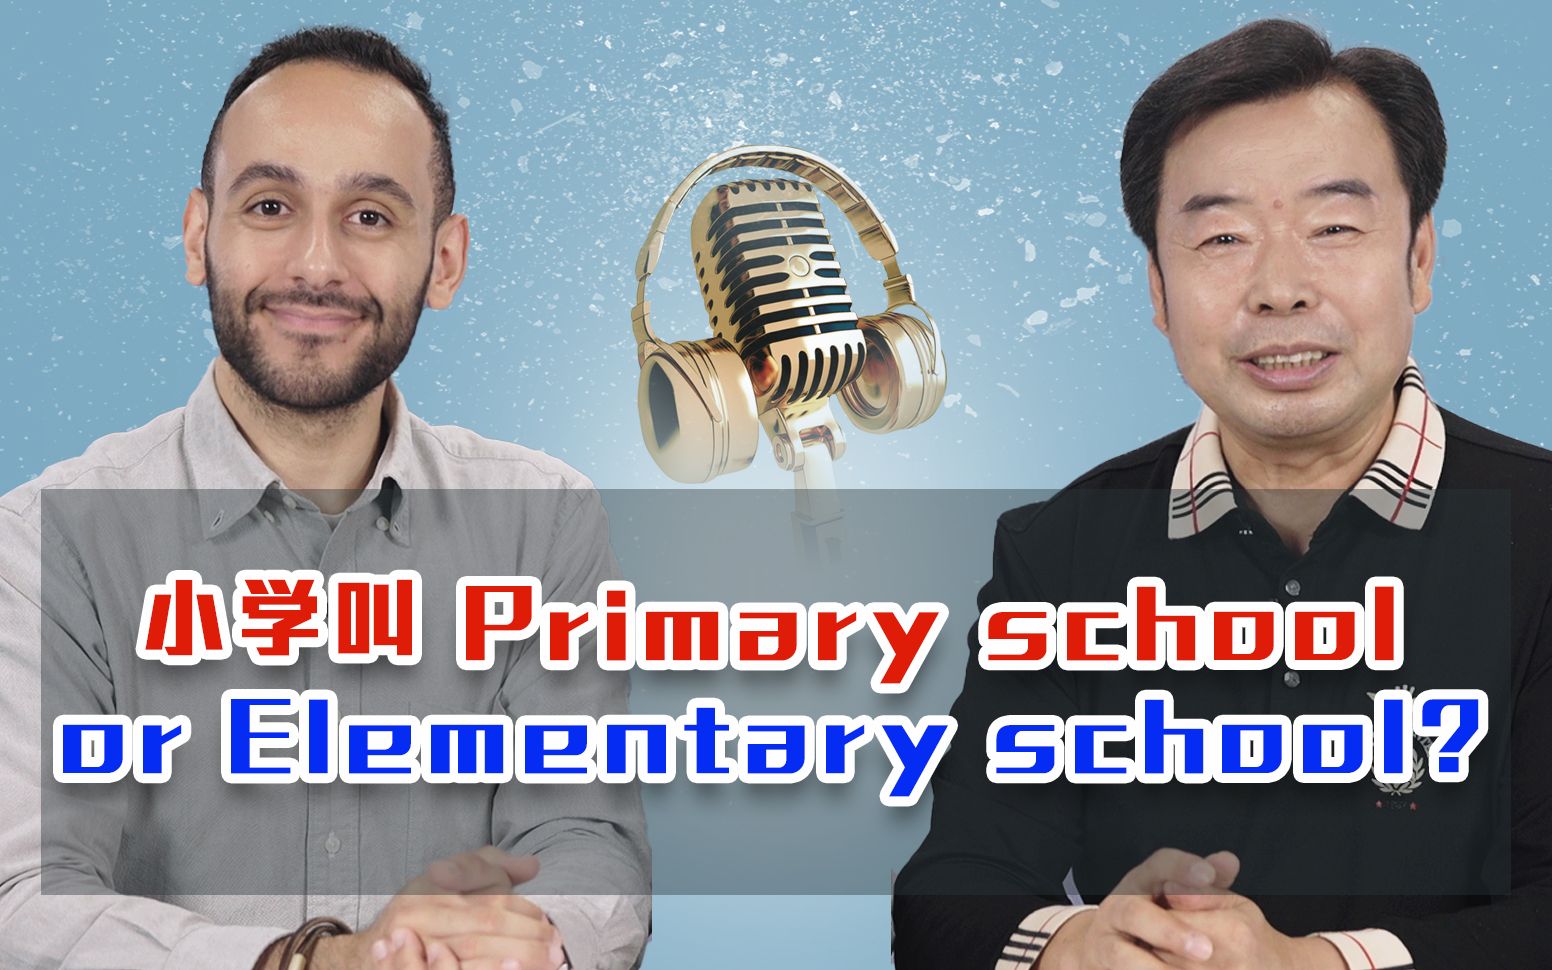 小学叫primary school 还是 elementary school？有啥区别呢？